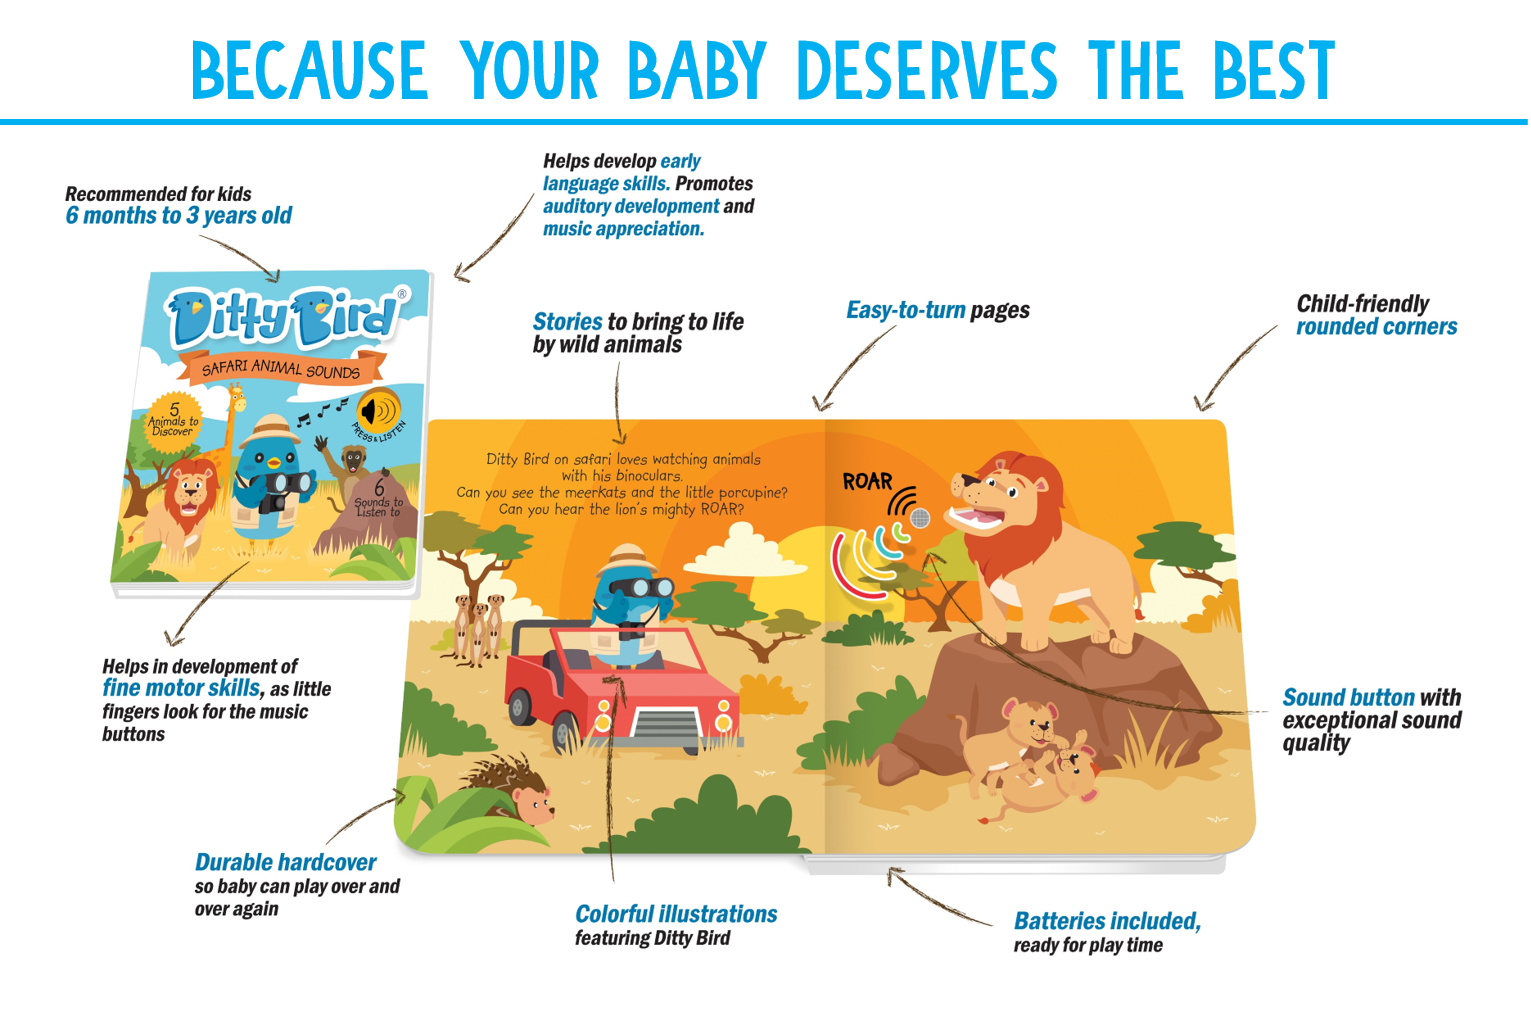 Ditty Bird Musical Books Safari Animal Sounds | The Nest Attachment Parenting Hub